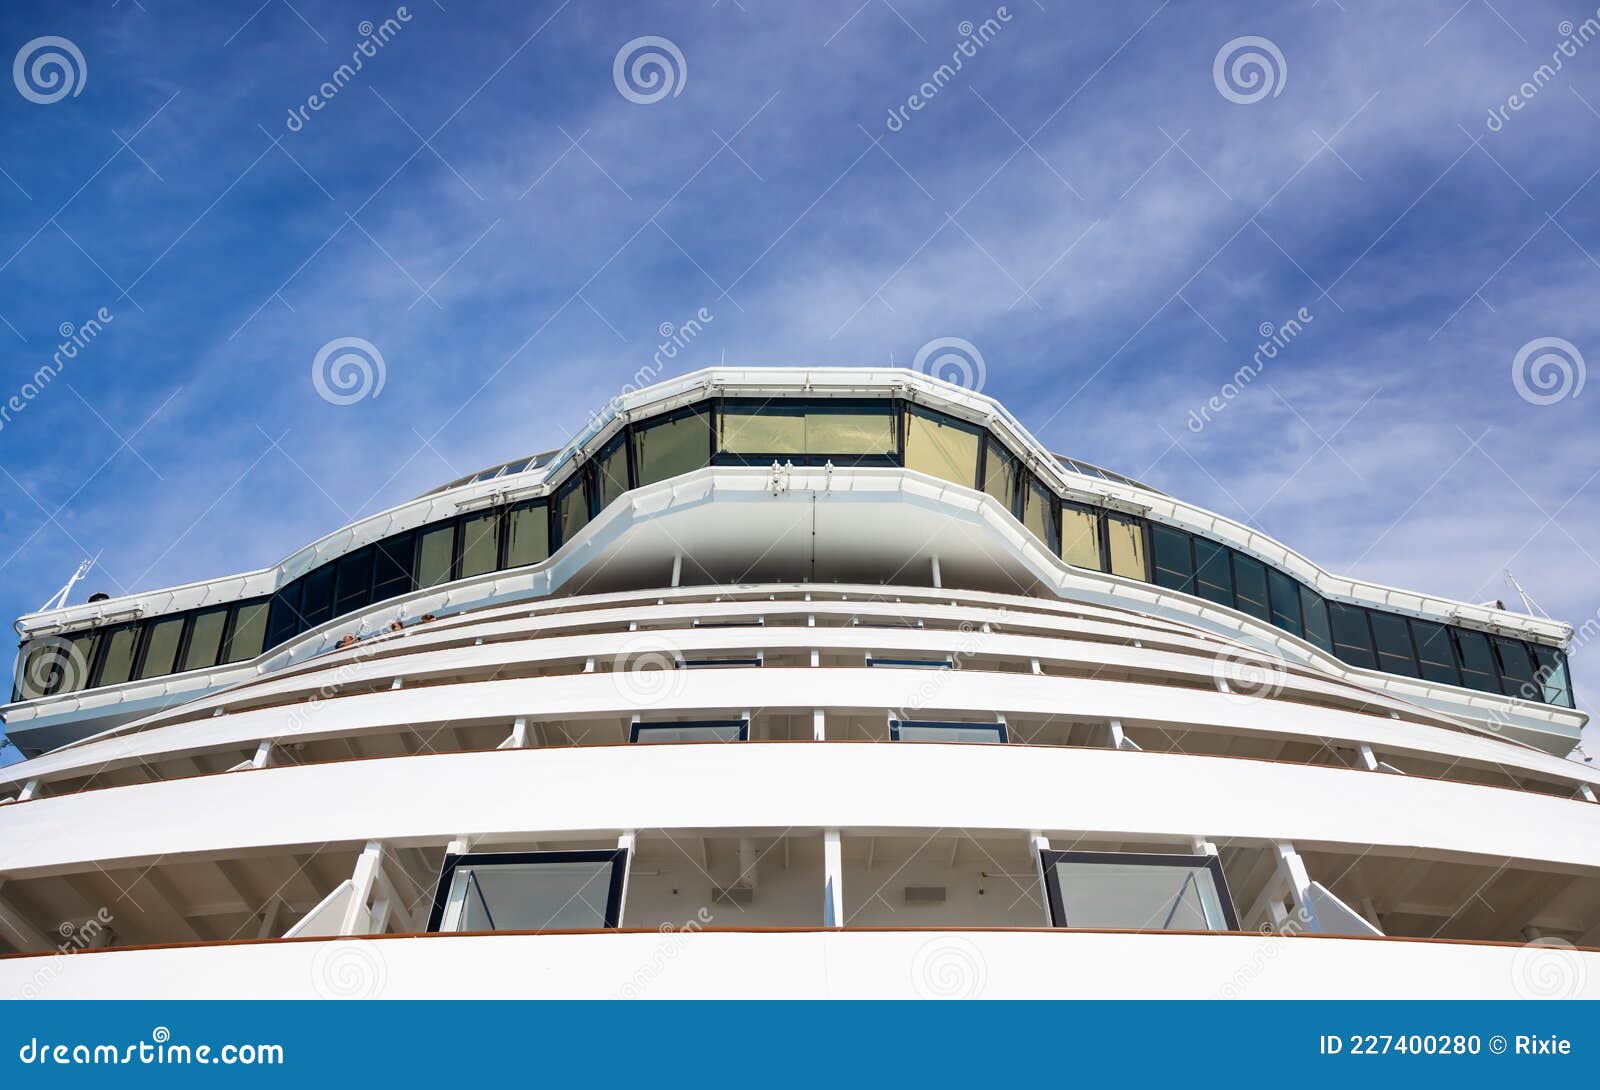 iona cruise ship bridge